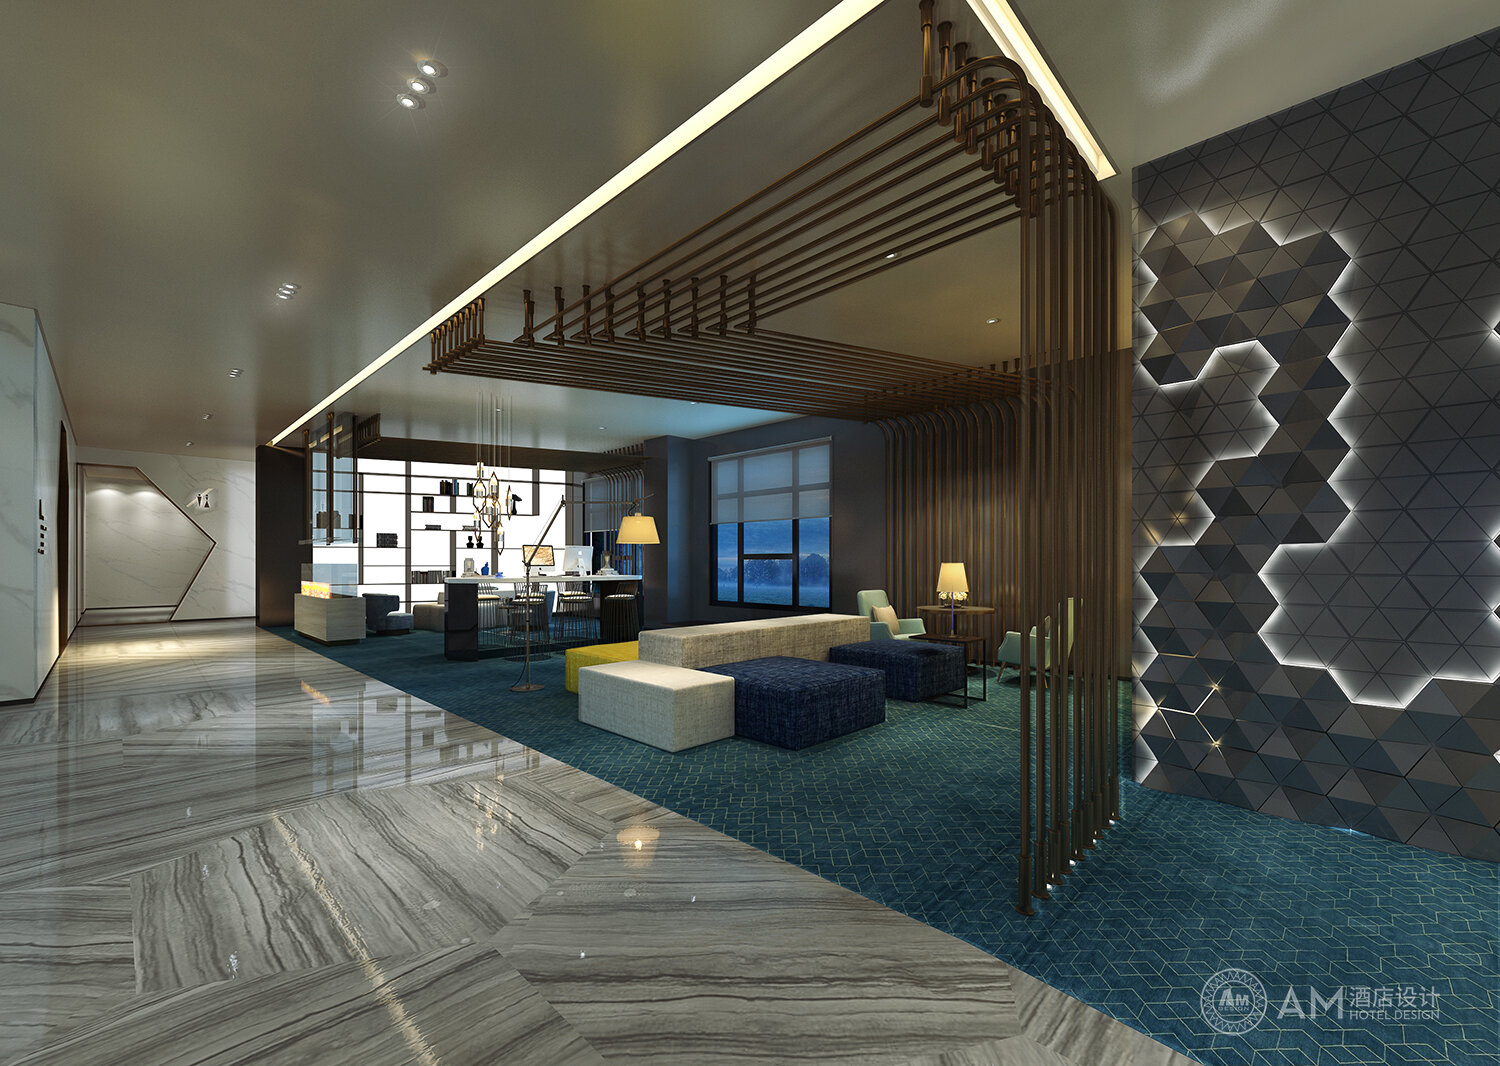 AM | Design of the hall of Xi'an Jinpan Hotel